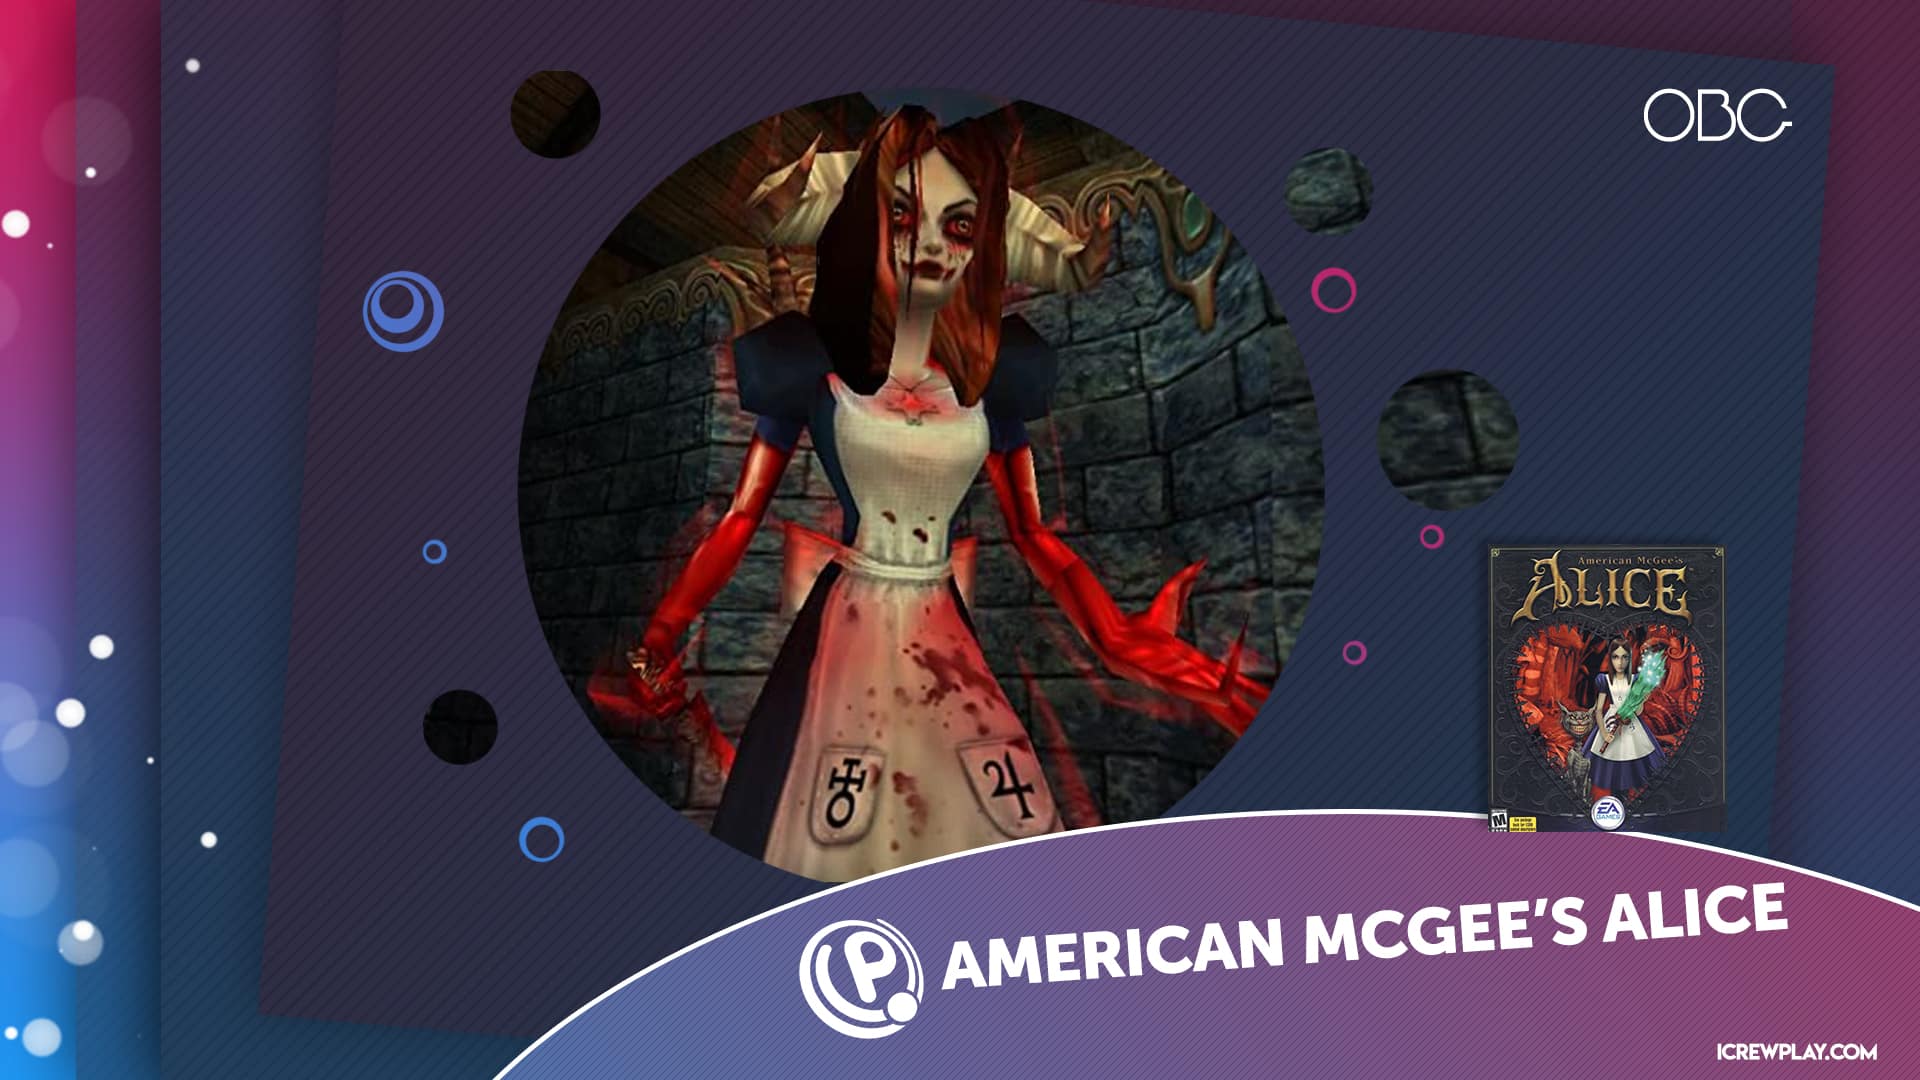 American Mcgee's Alice - OBG